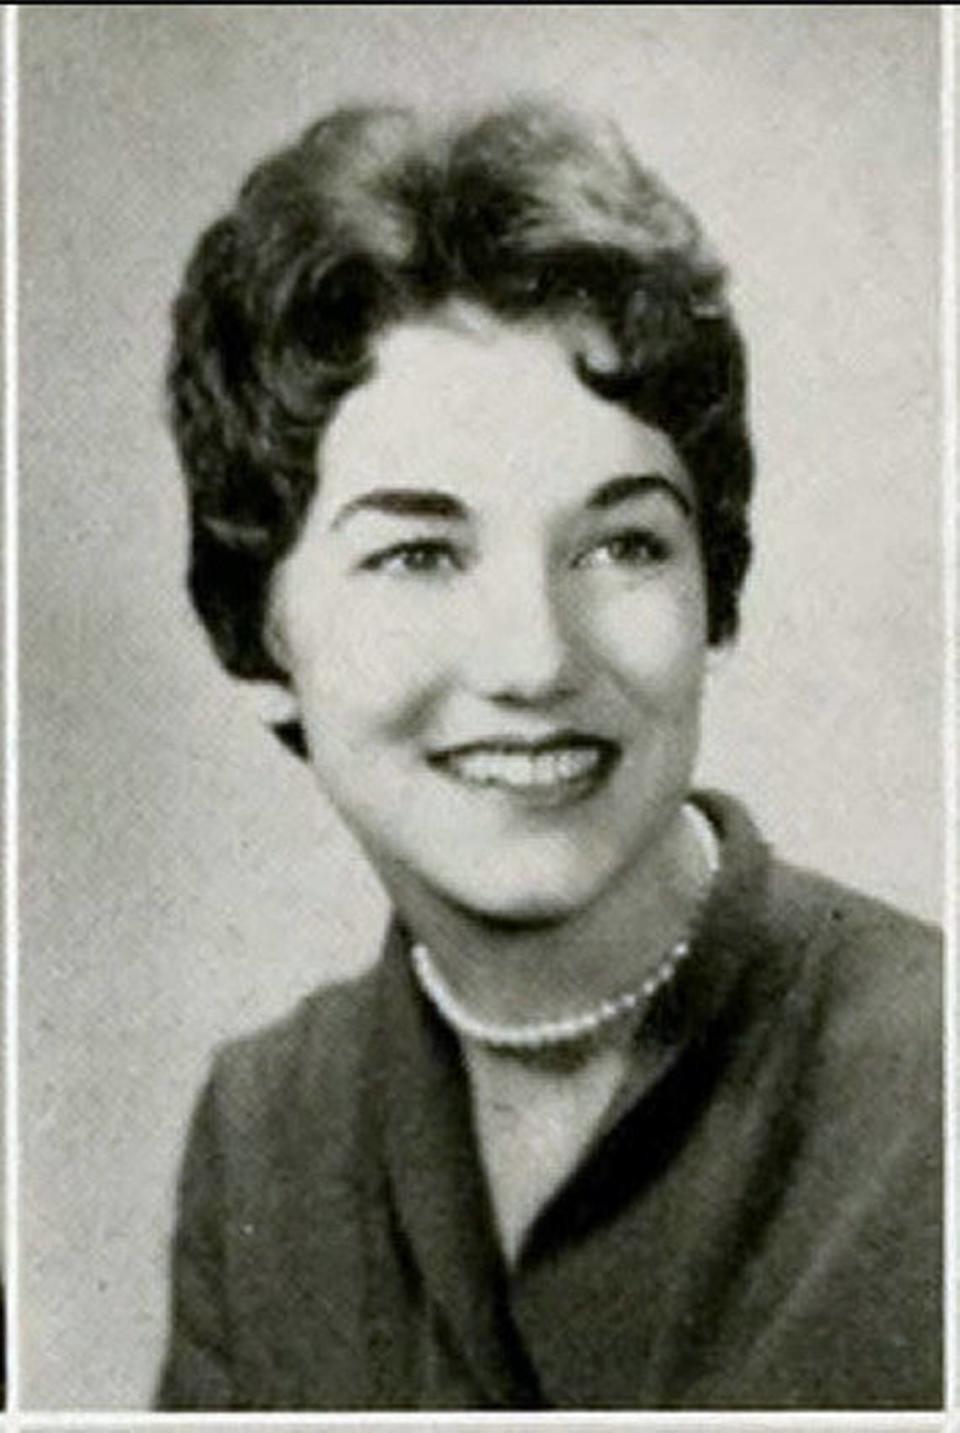 Elizabeth “Liddy” Hanford, later to become Elizabeth Dole, 1958